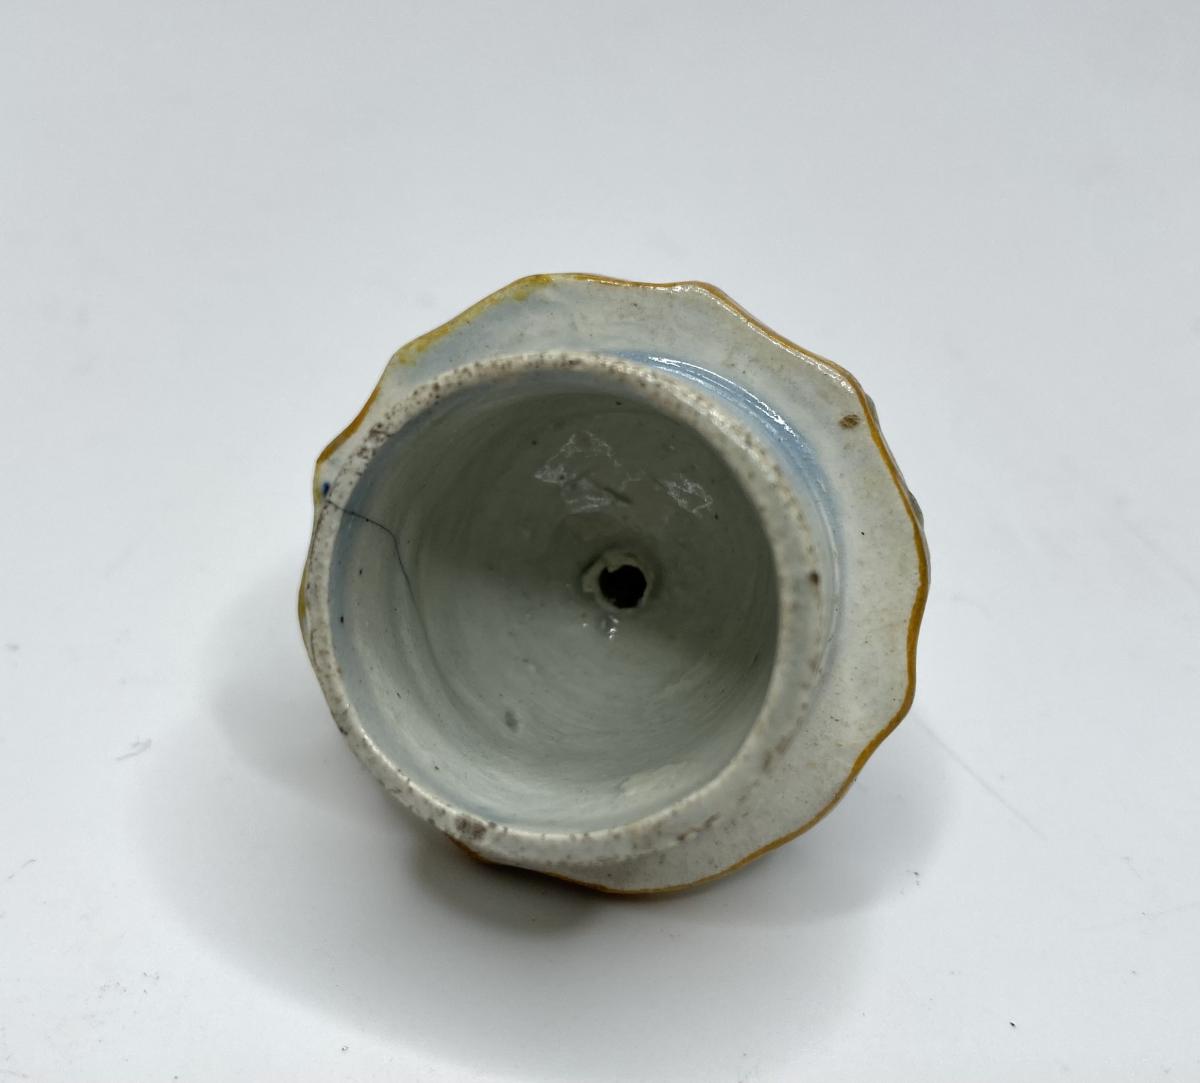 Prattware pottery ‘Macaroni’ tea caddy and cover